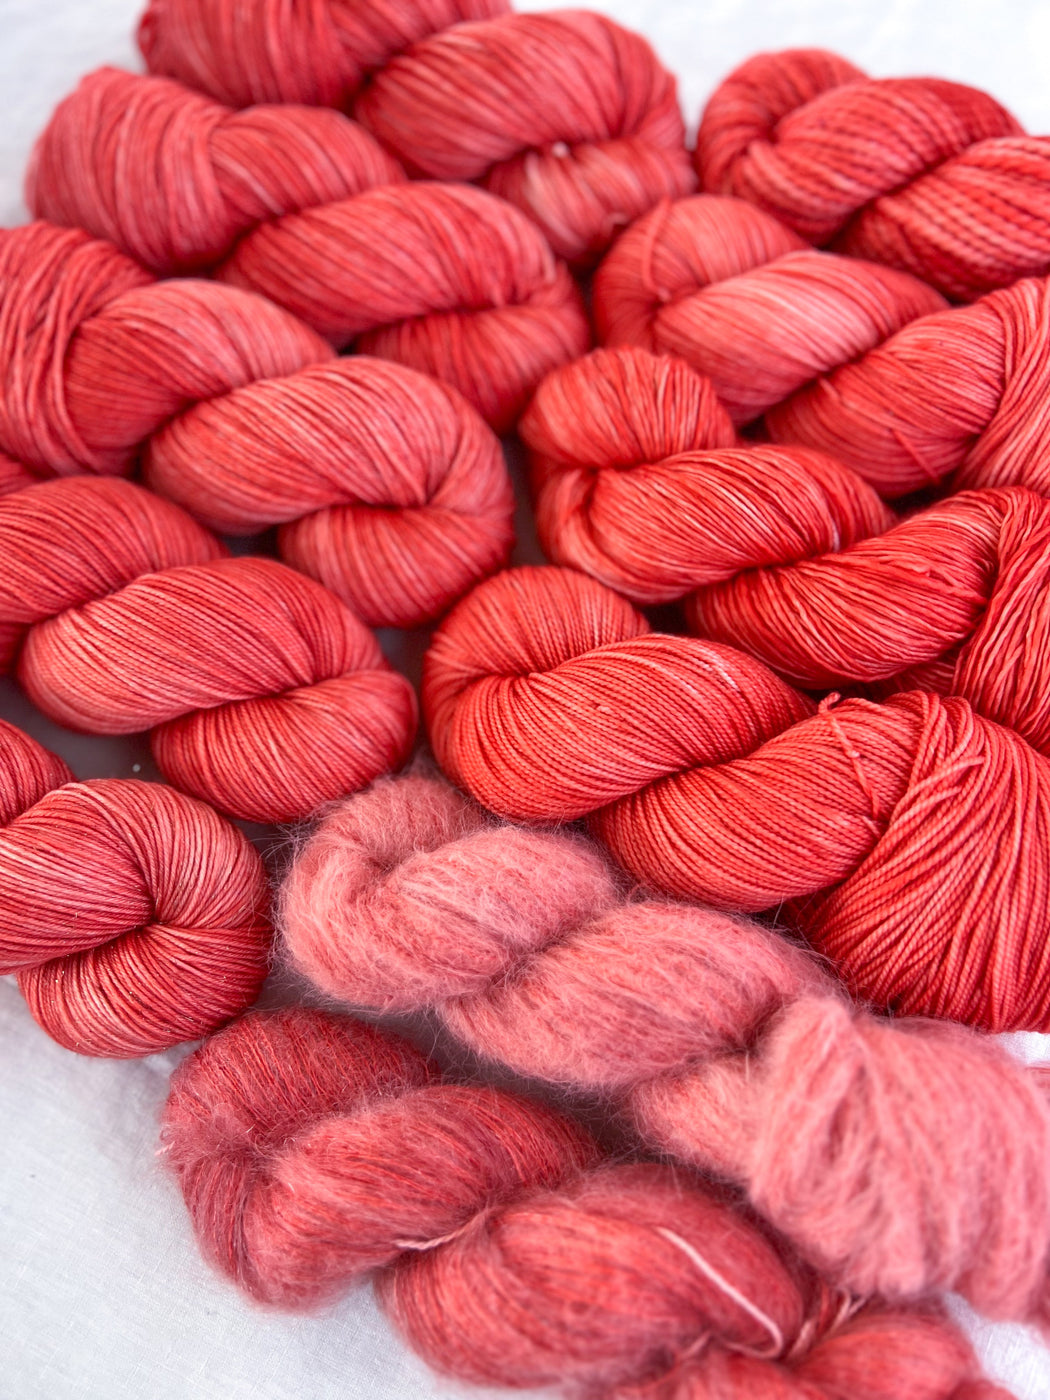 Marmalade - Ruby and Roses Yarn - Hand Dyed Yarn